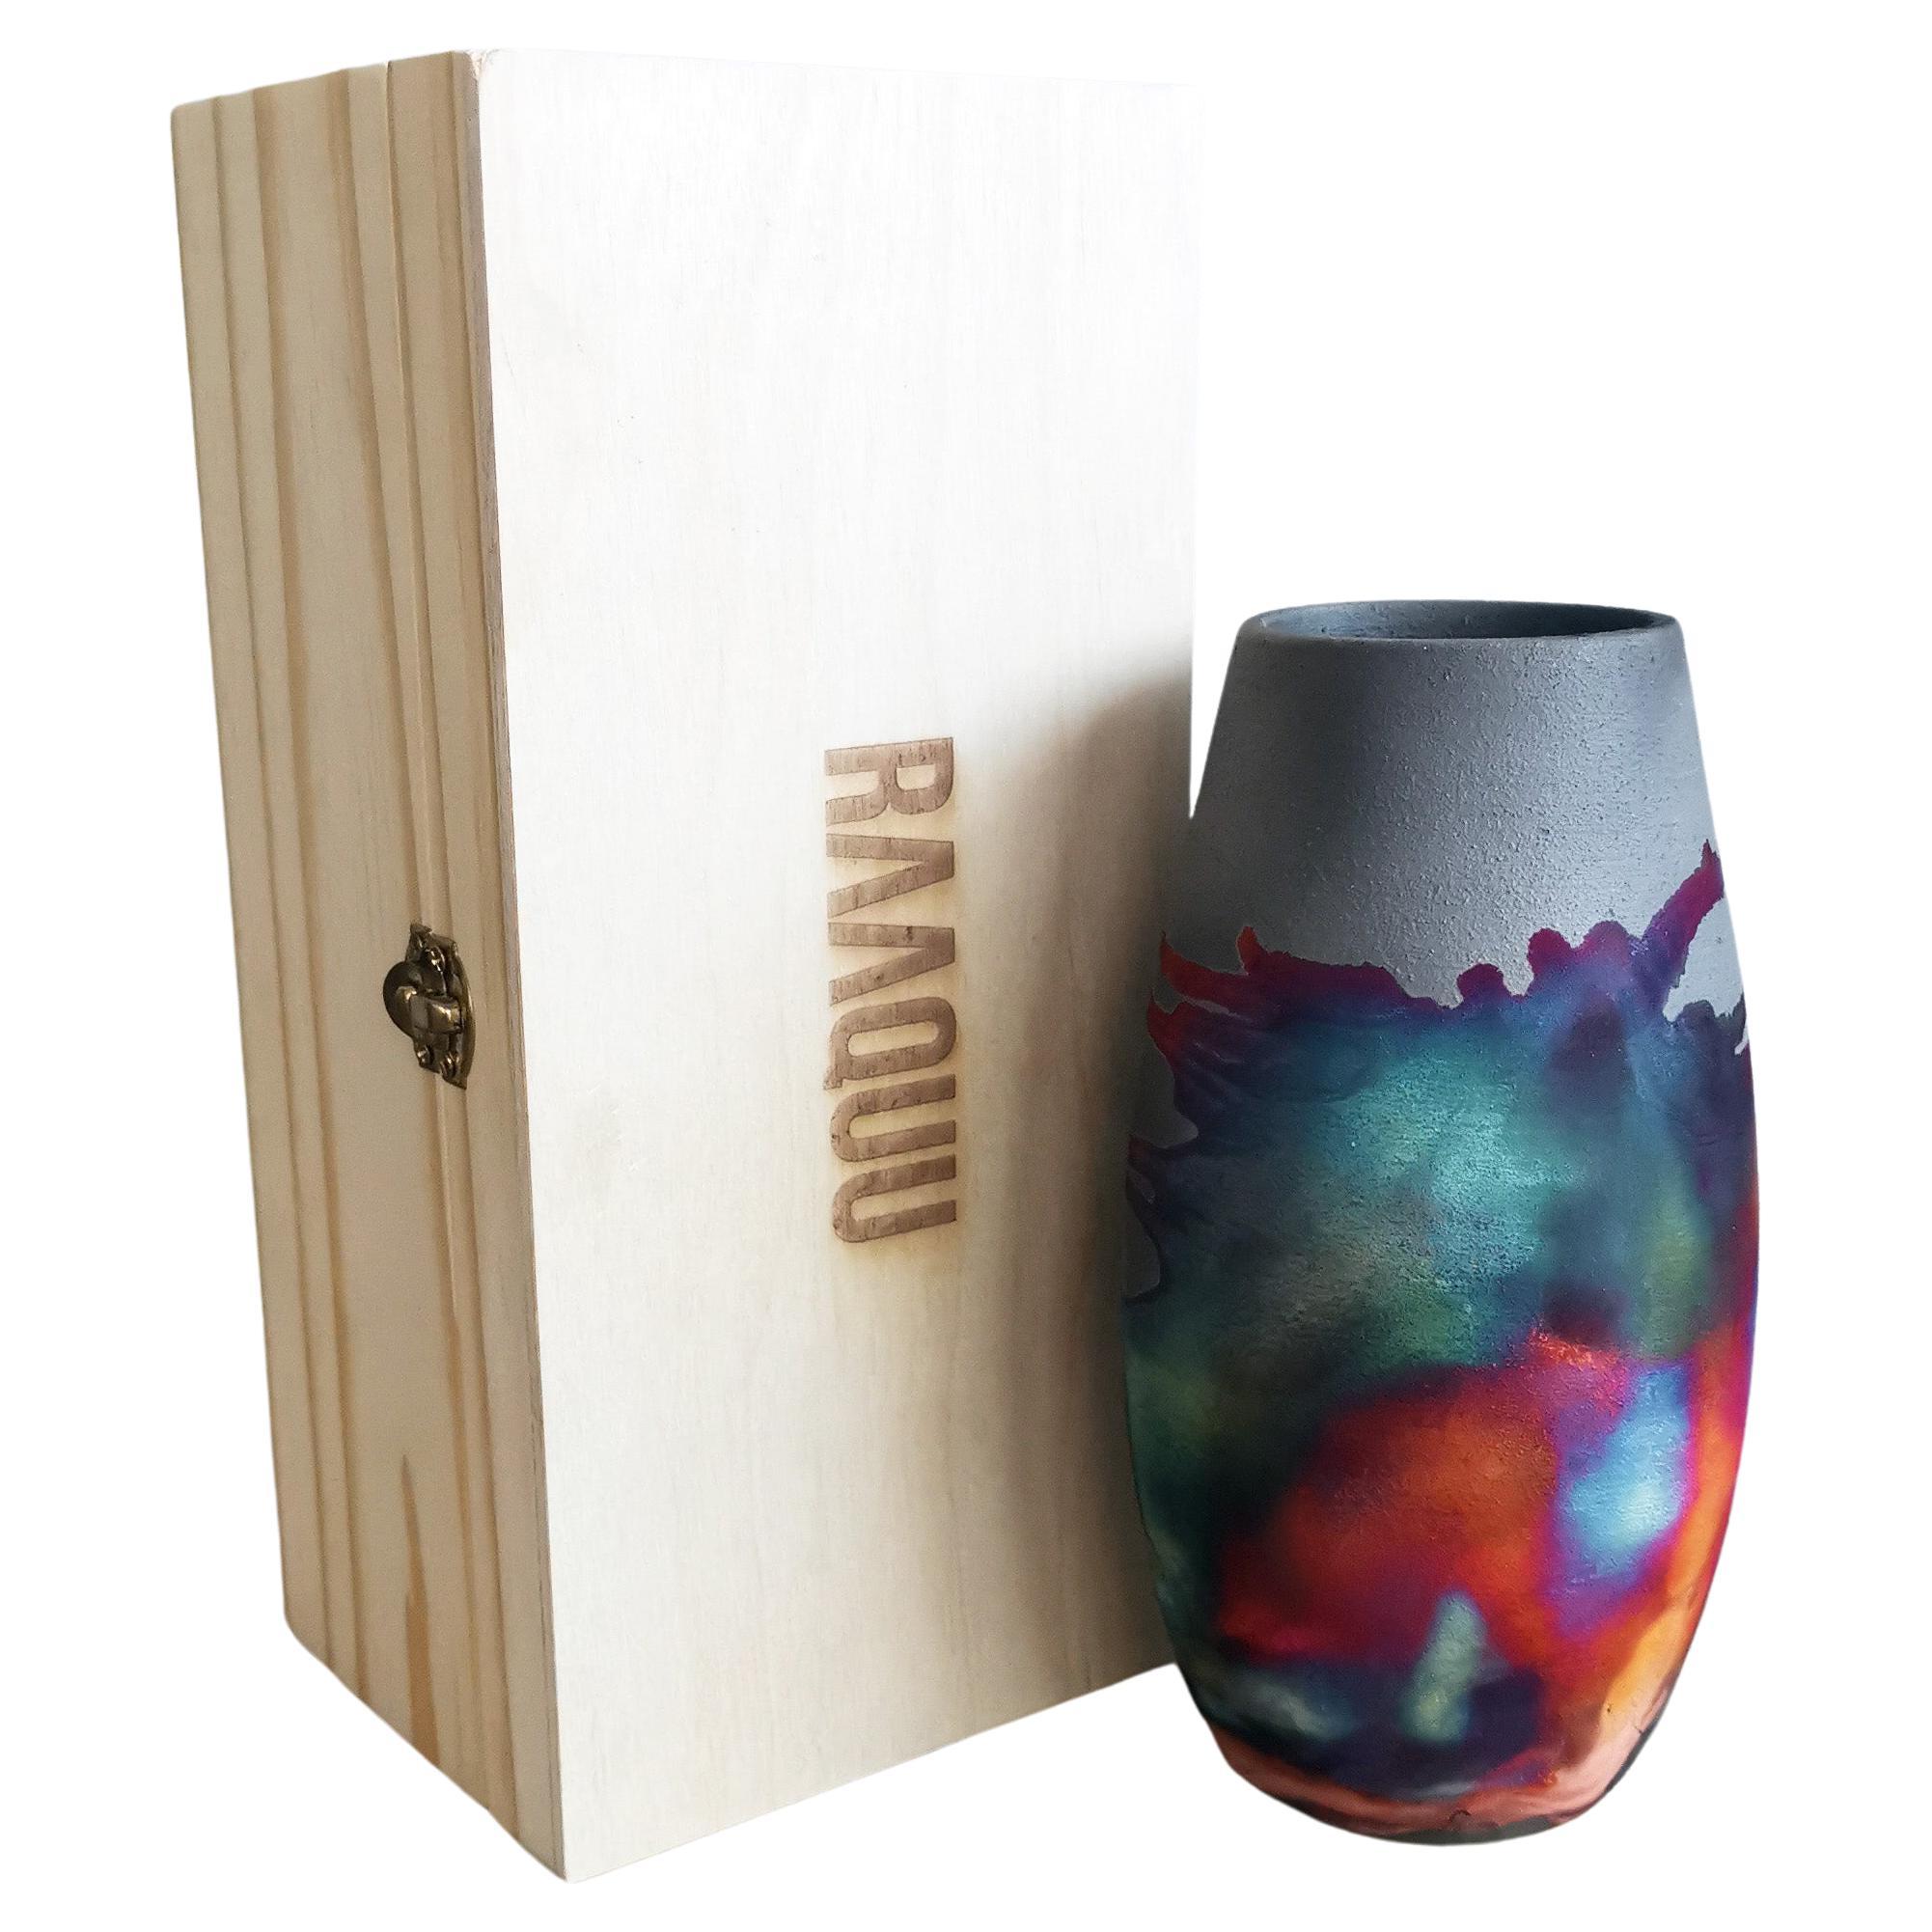 Tsuri Raku Pottery Vase with Gift Box - Carbon Copper - Handmade Ceramic For Sale